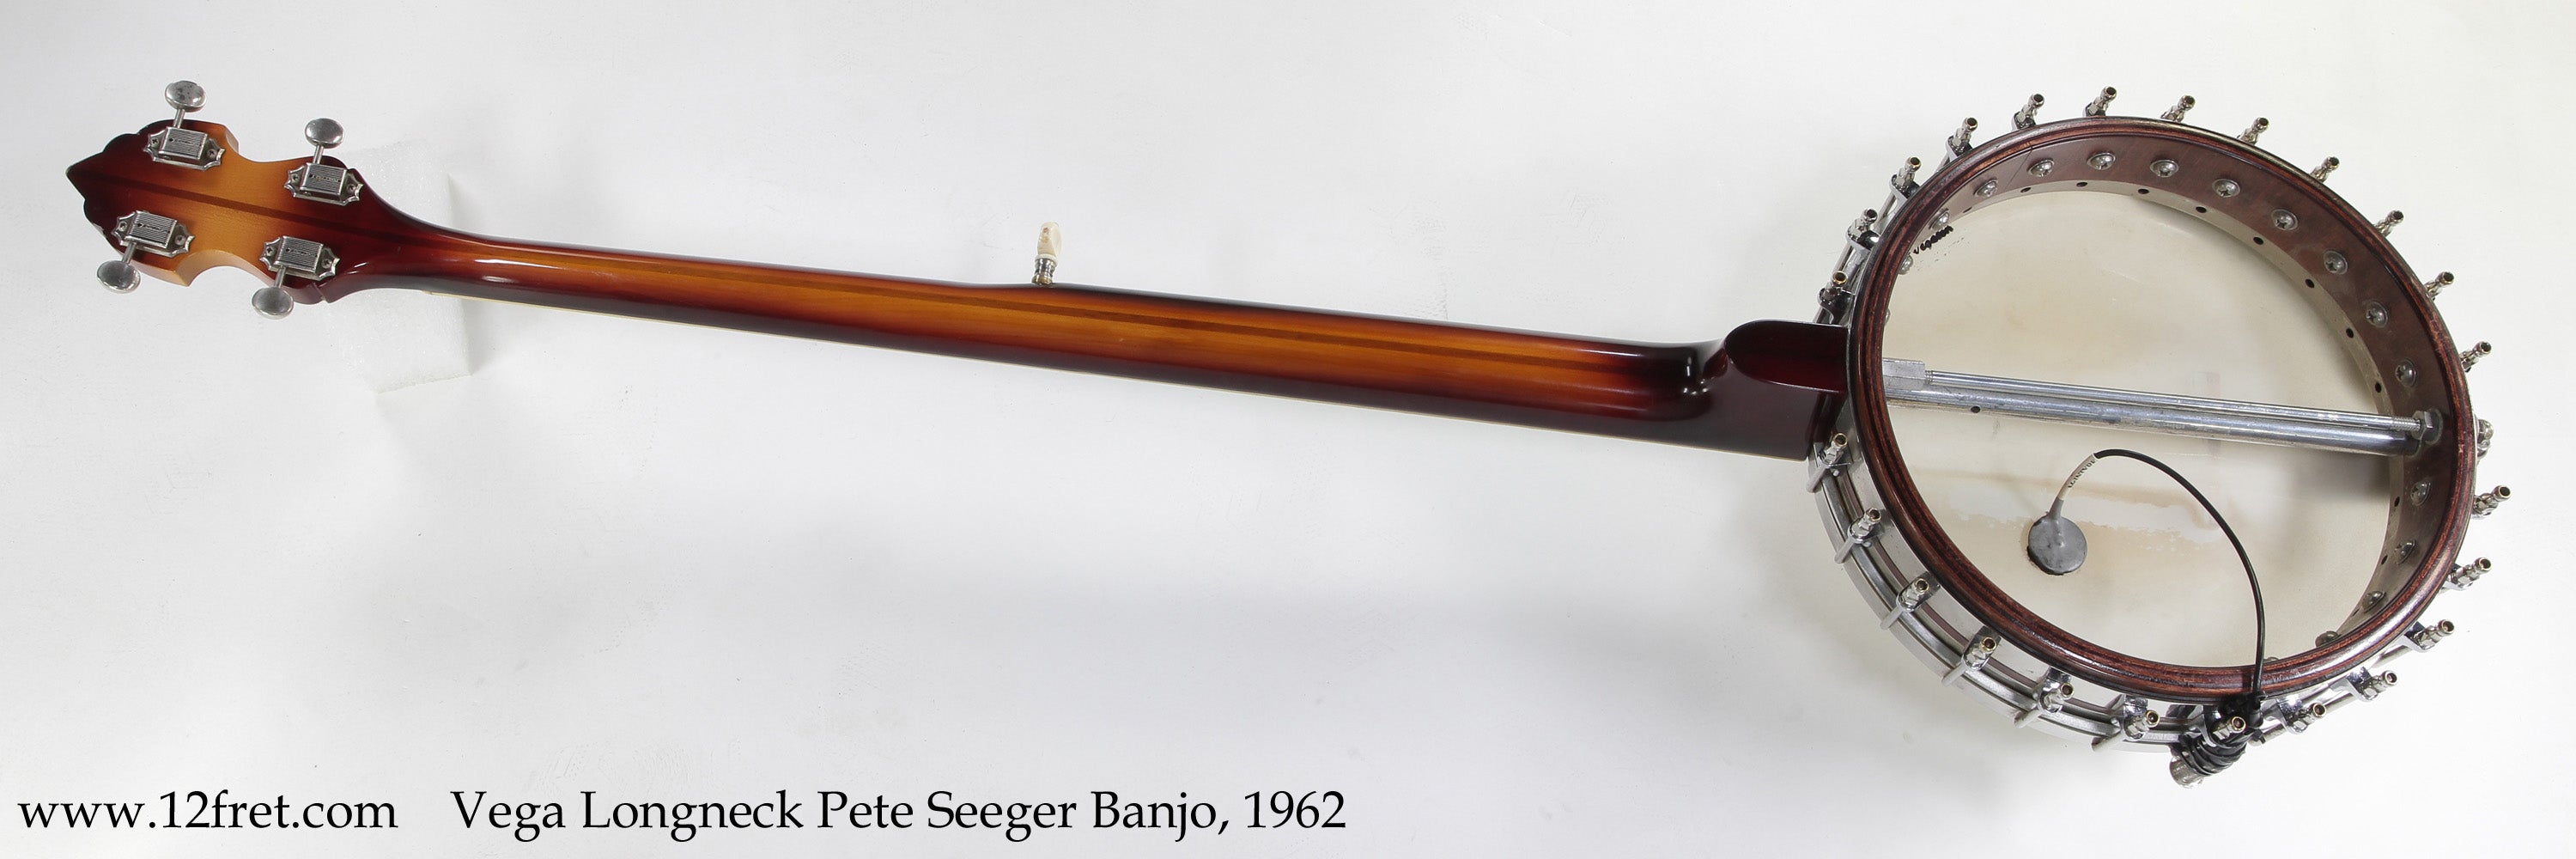 Vega Longneck Pete Seeger Banjo, 1962 - The Twelfth Fret